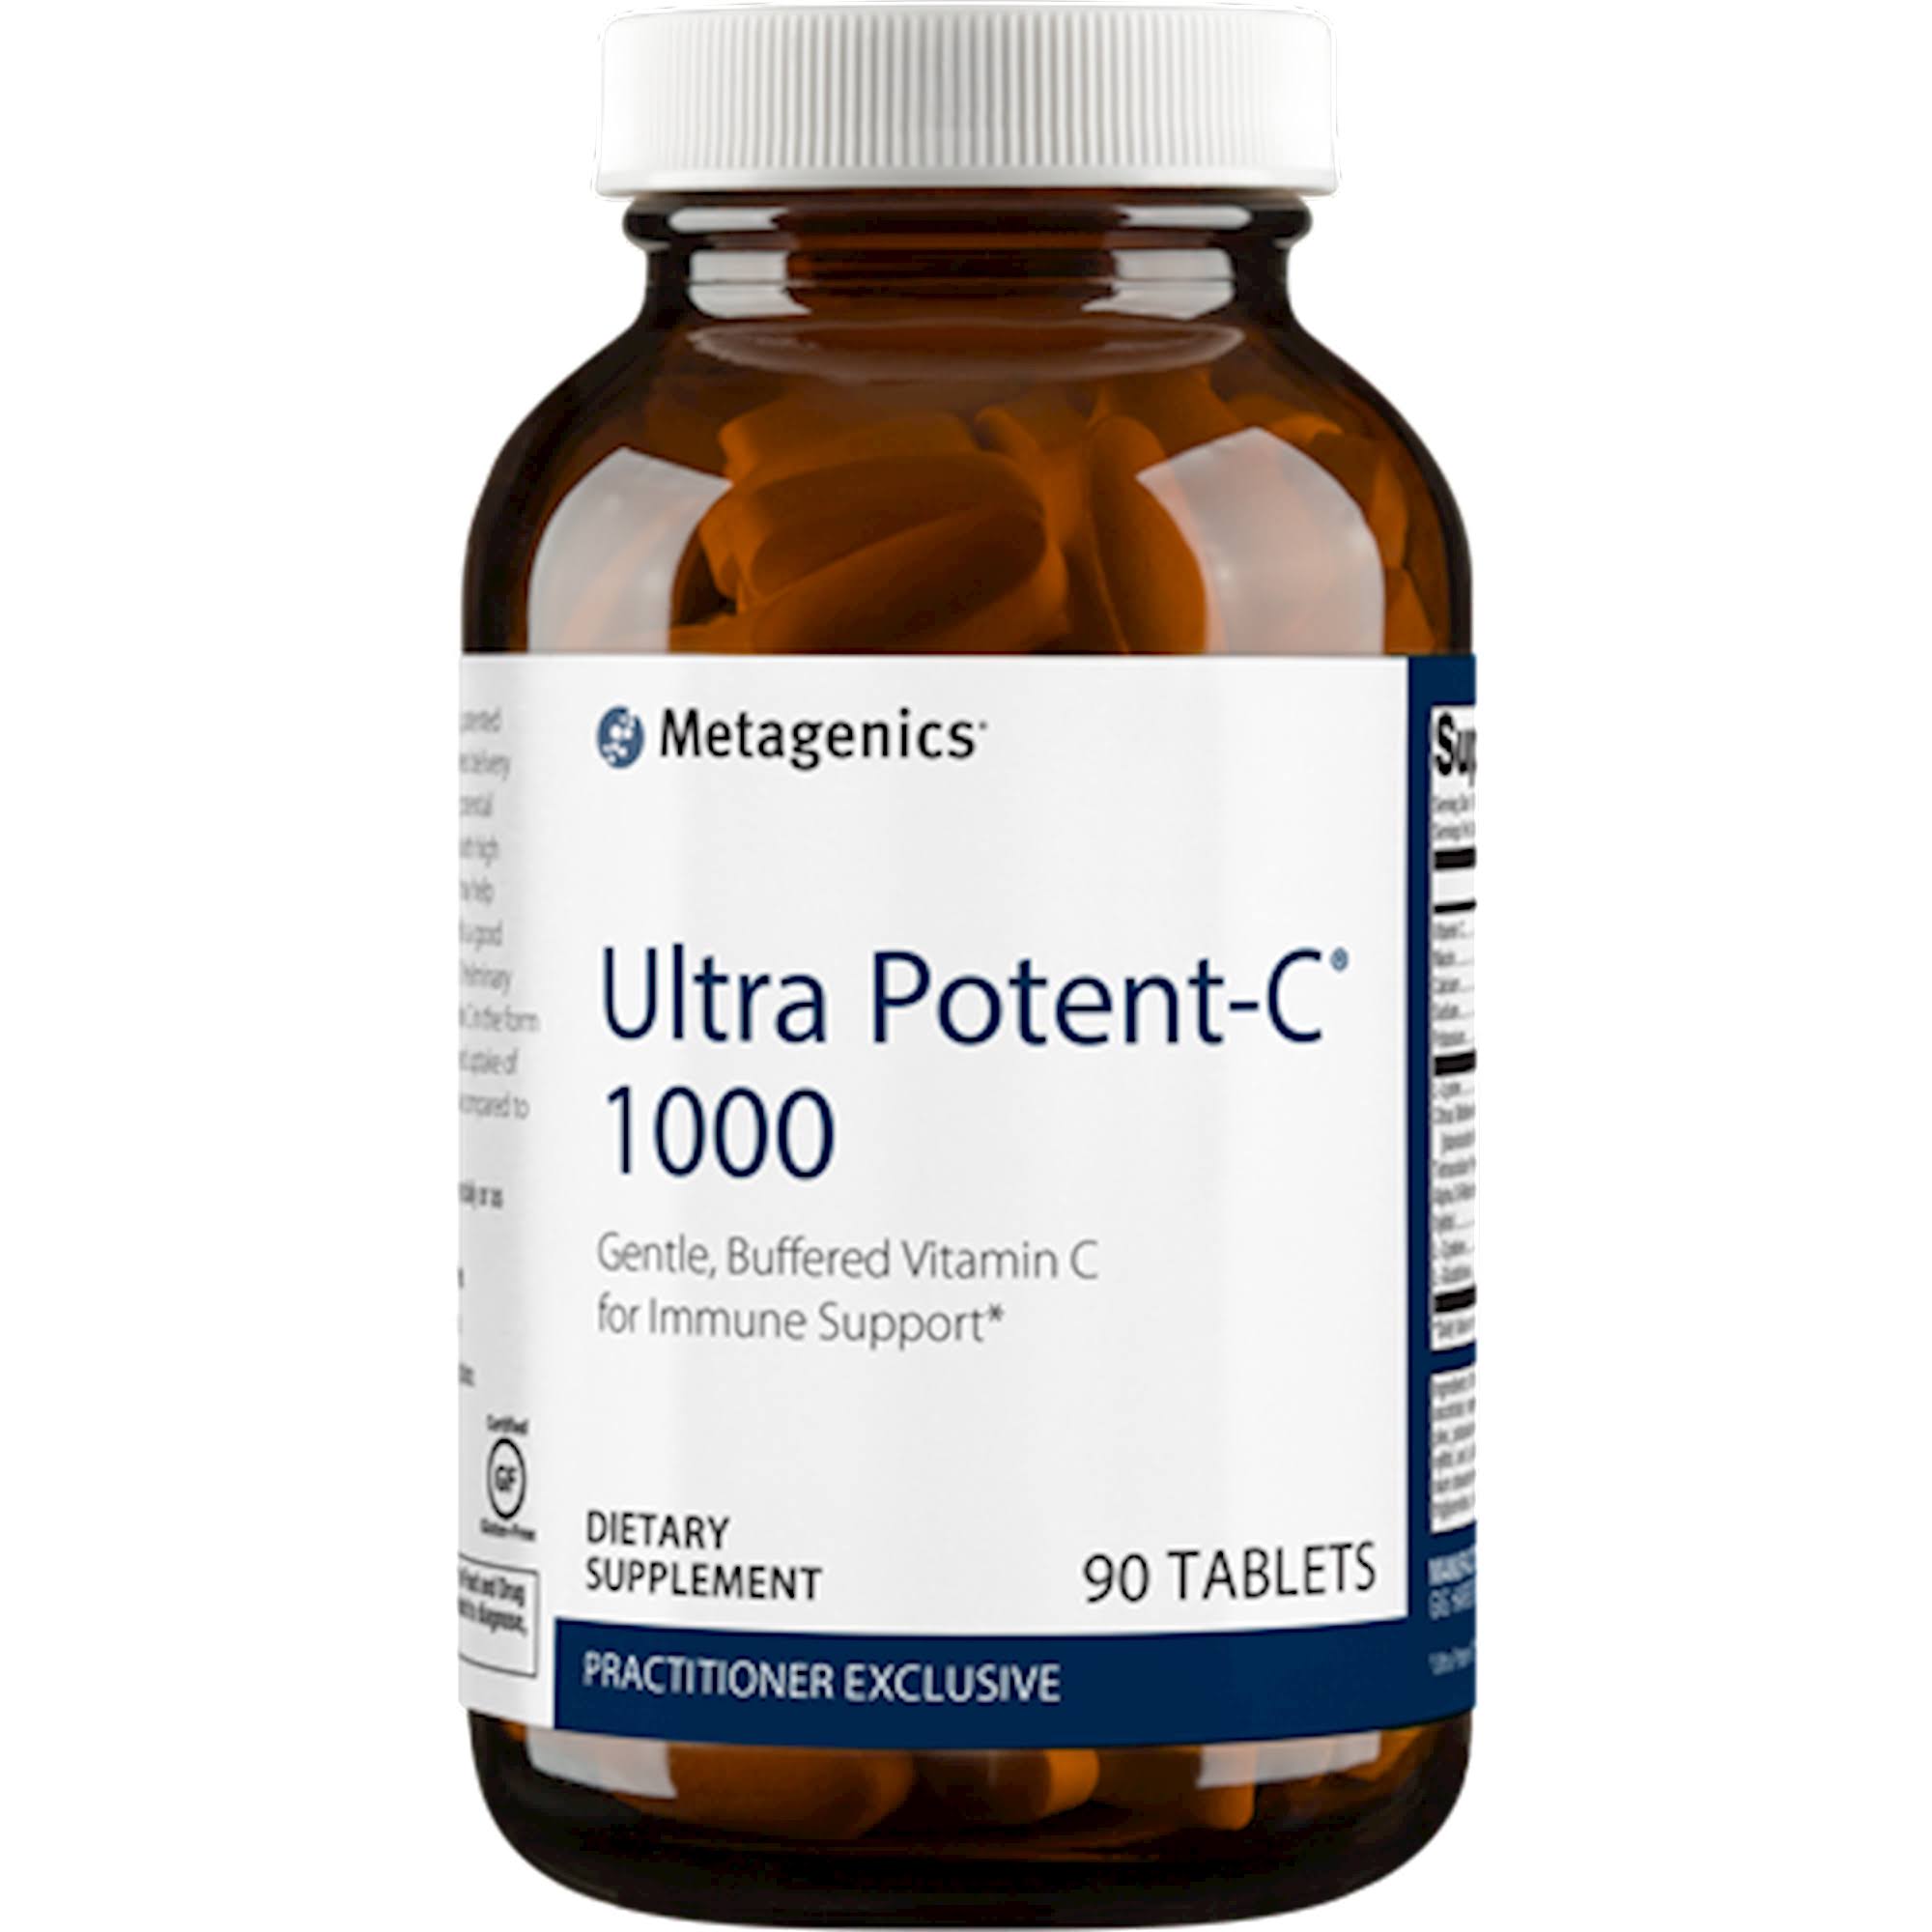 Metagenics Ultra Potent-C Dietary Supplement - 90ct